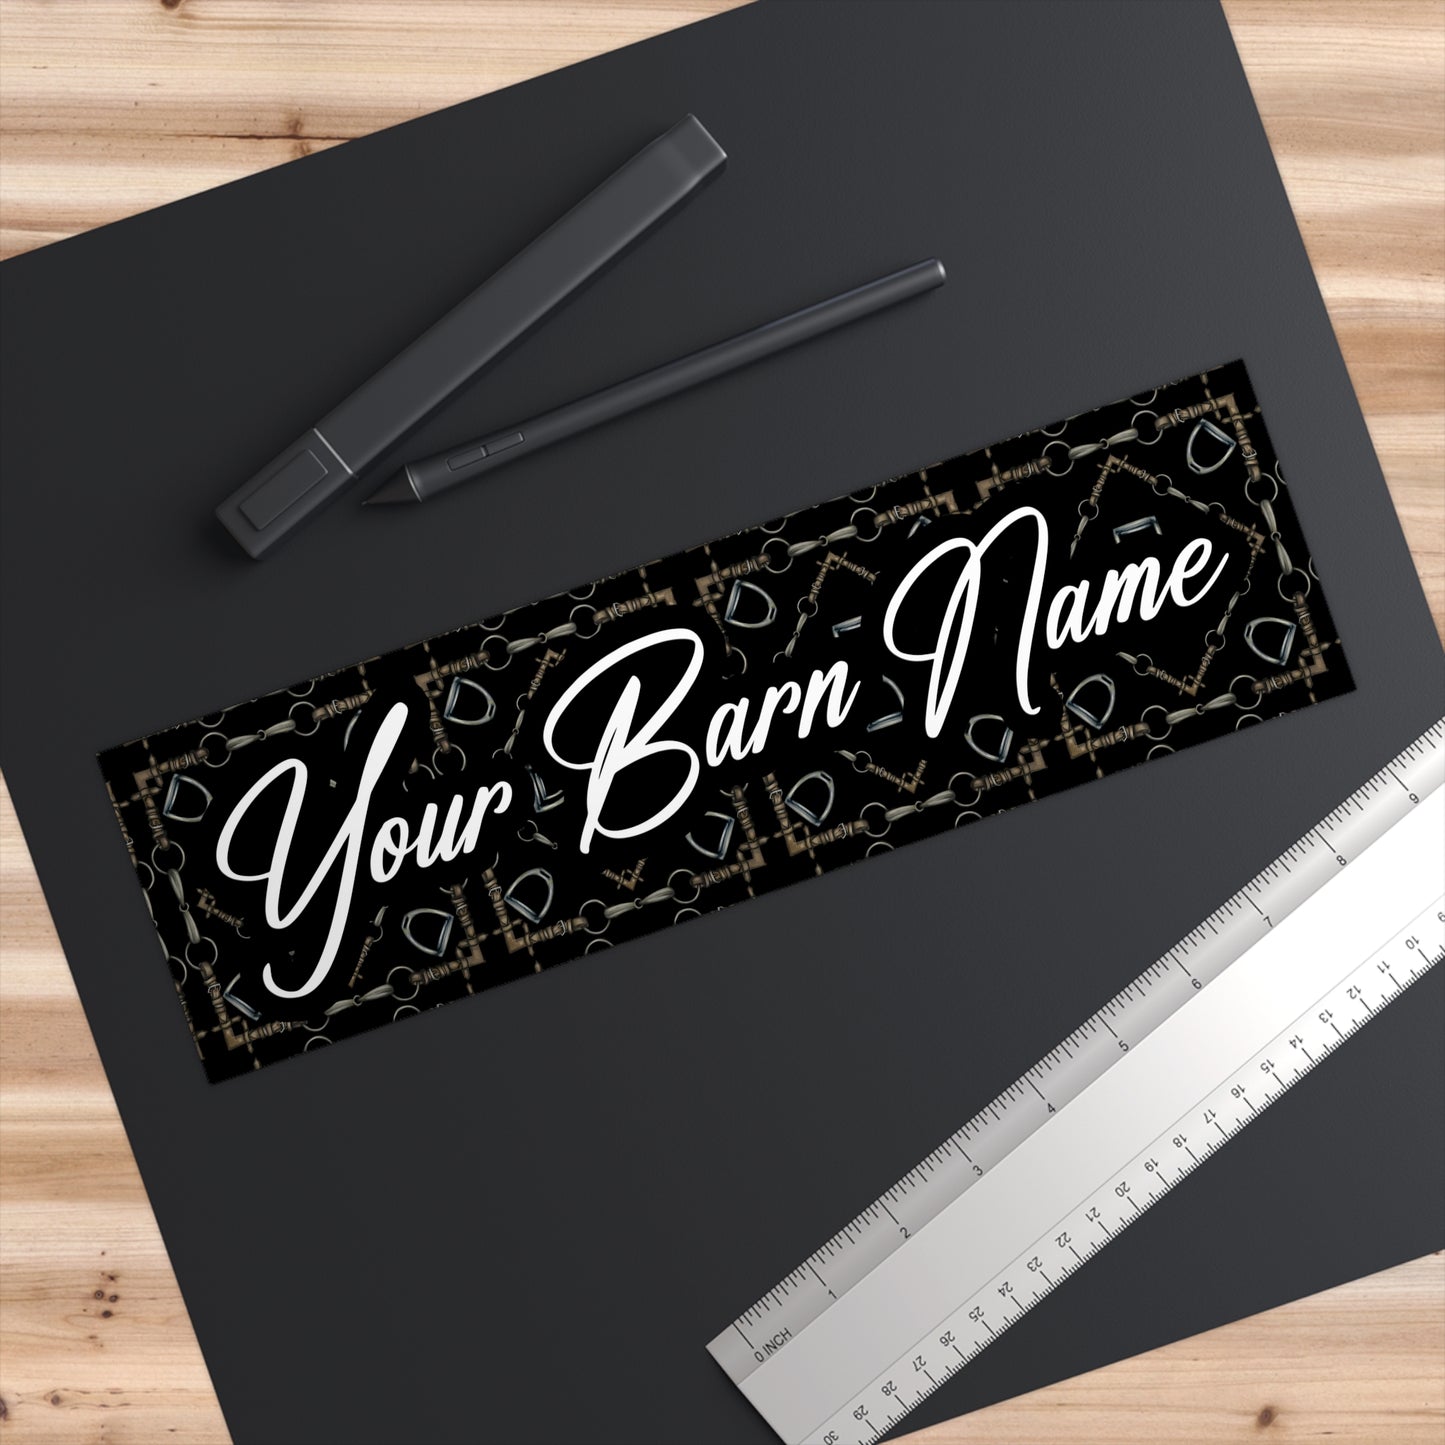 Your Barn Name, Customizable Equestrian Bumper Sticker